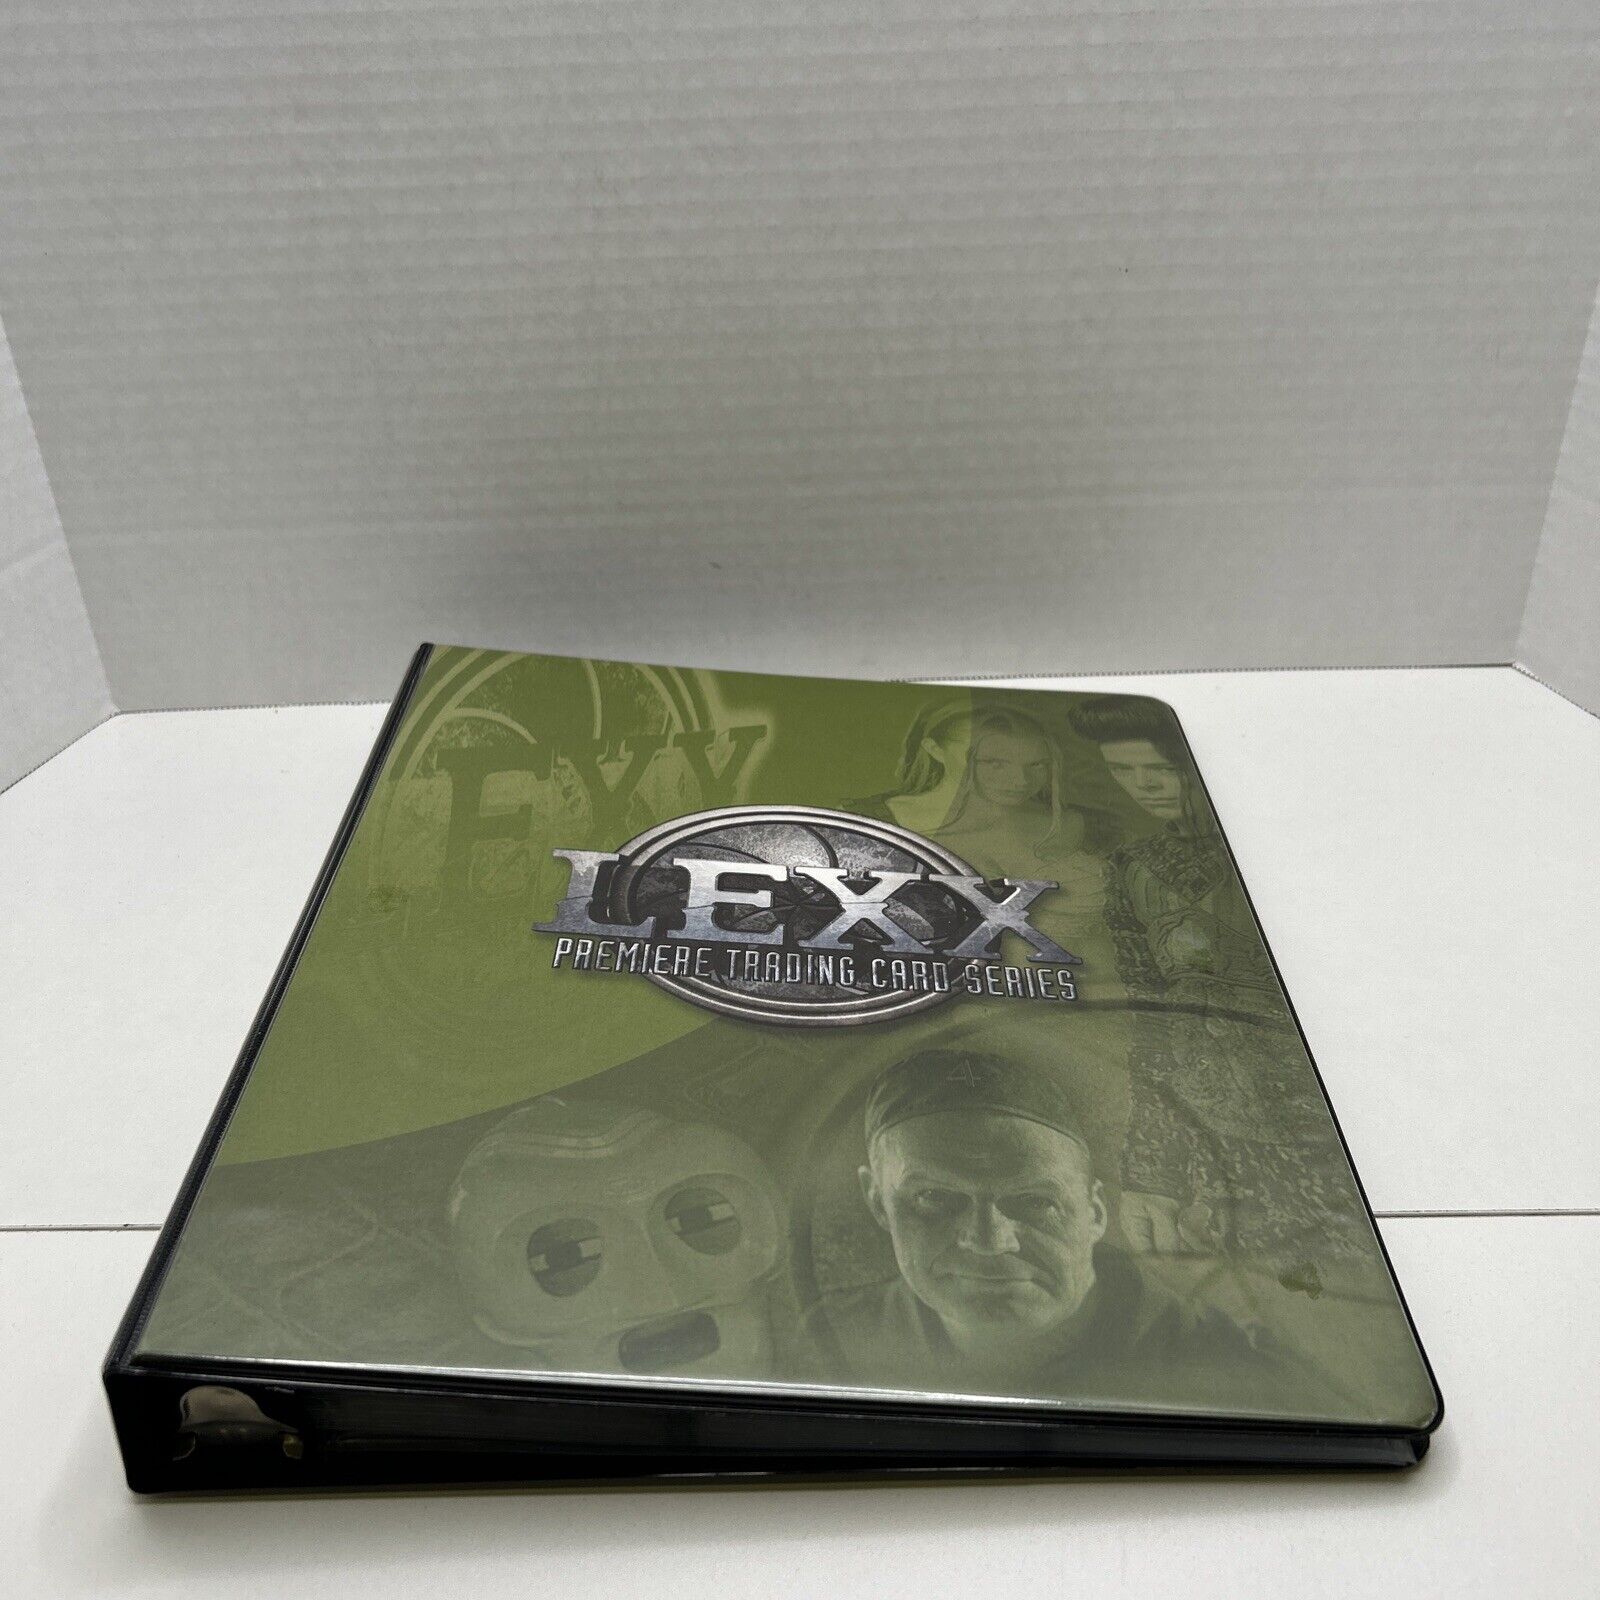 LEXX Premiere Trading Cards Complete Base Card Set W/ Binder, Autographs, Extras